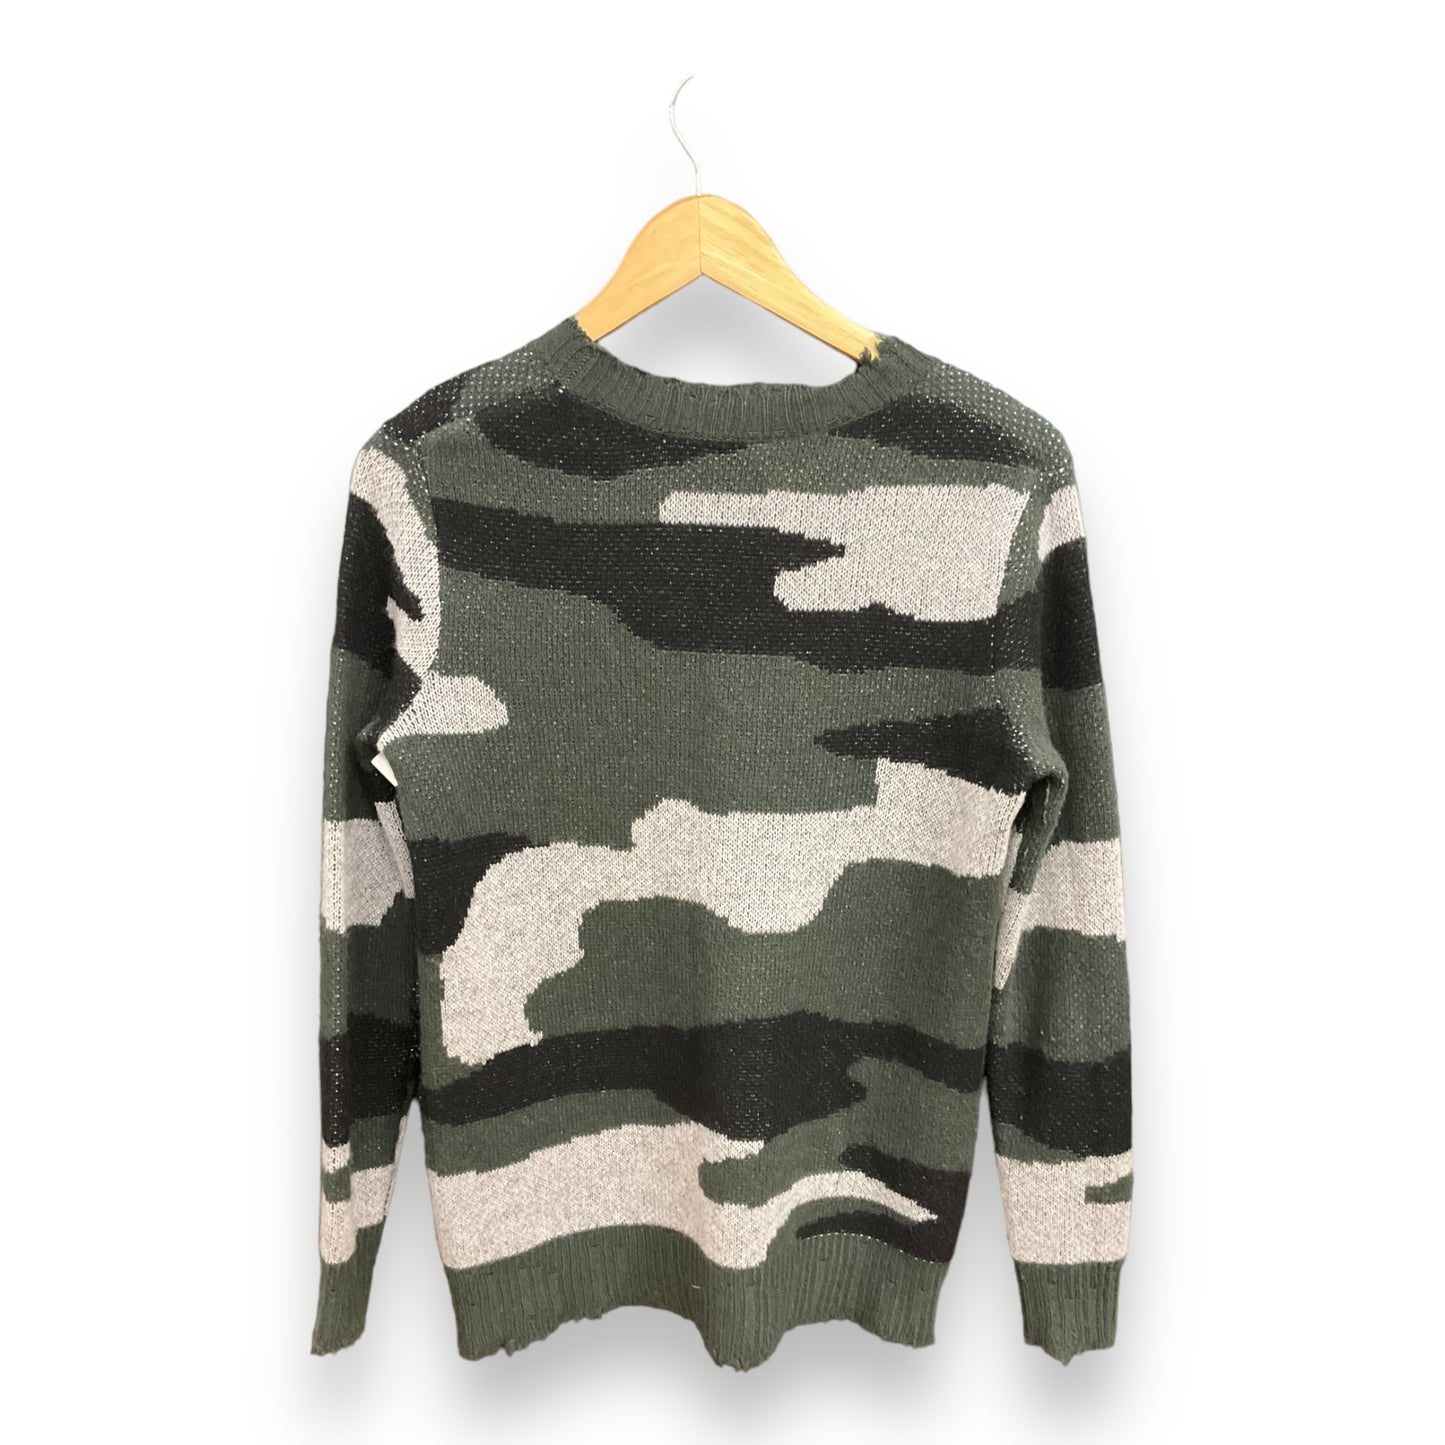 Sweater By Aqua  Size: S